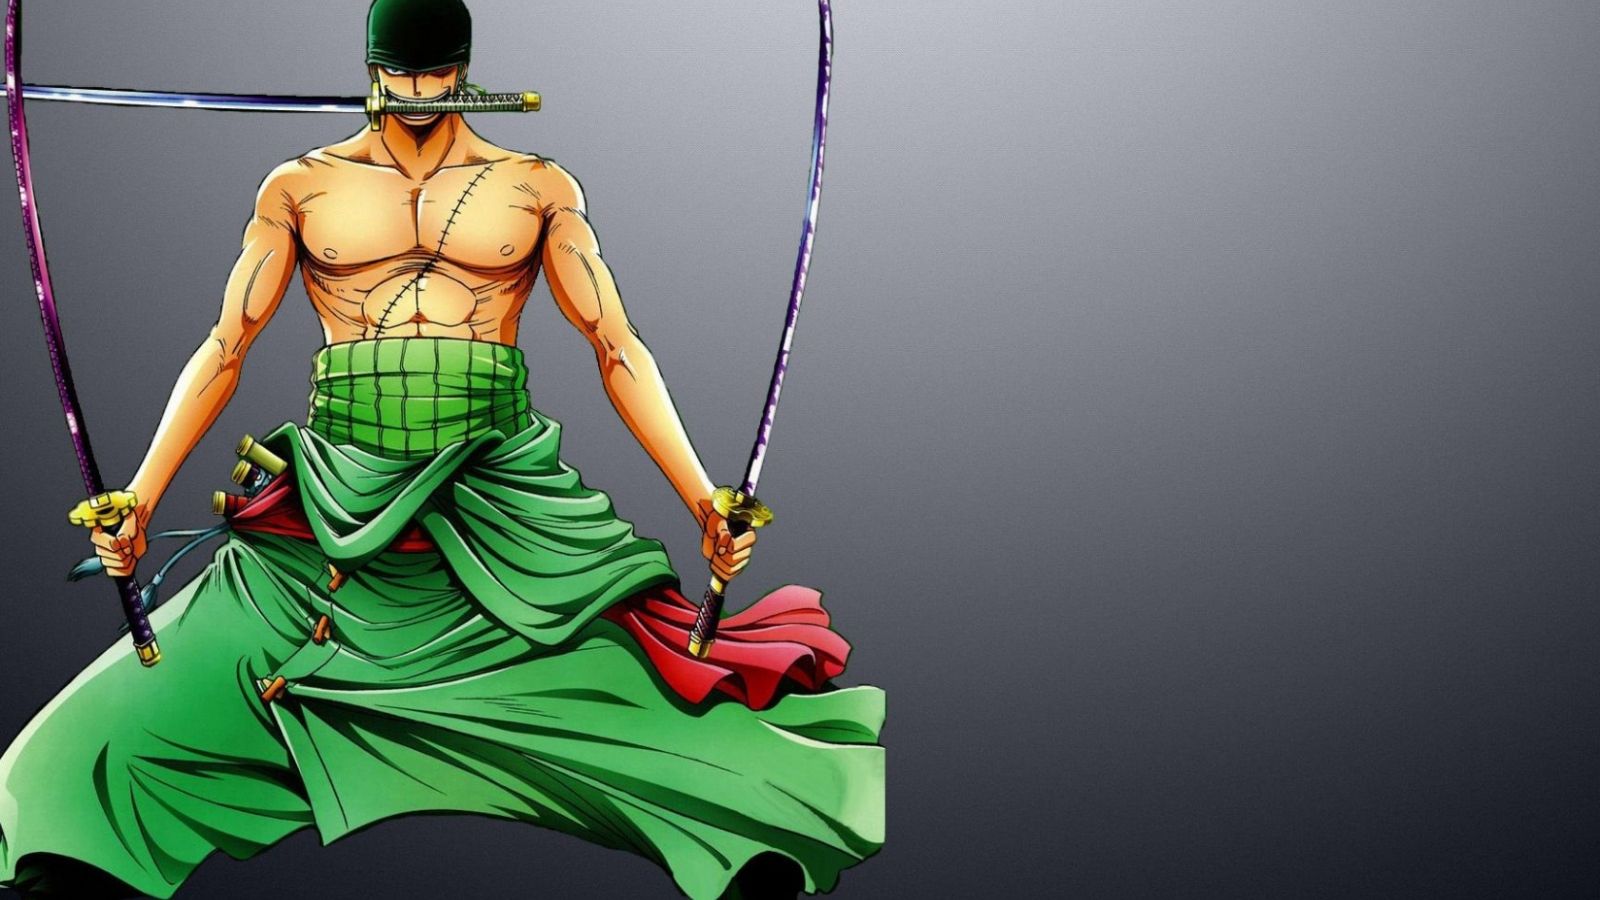 Free download Roronoa Zoro with swords One Piece HD desktop